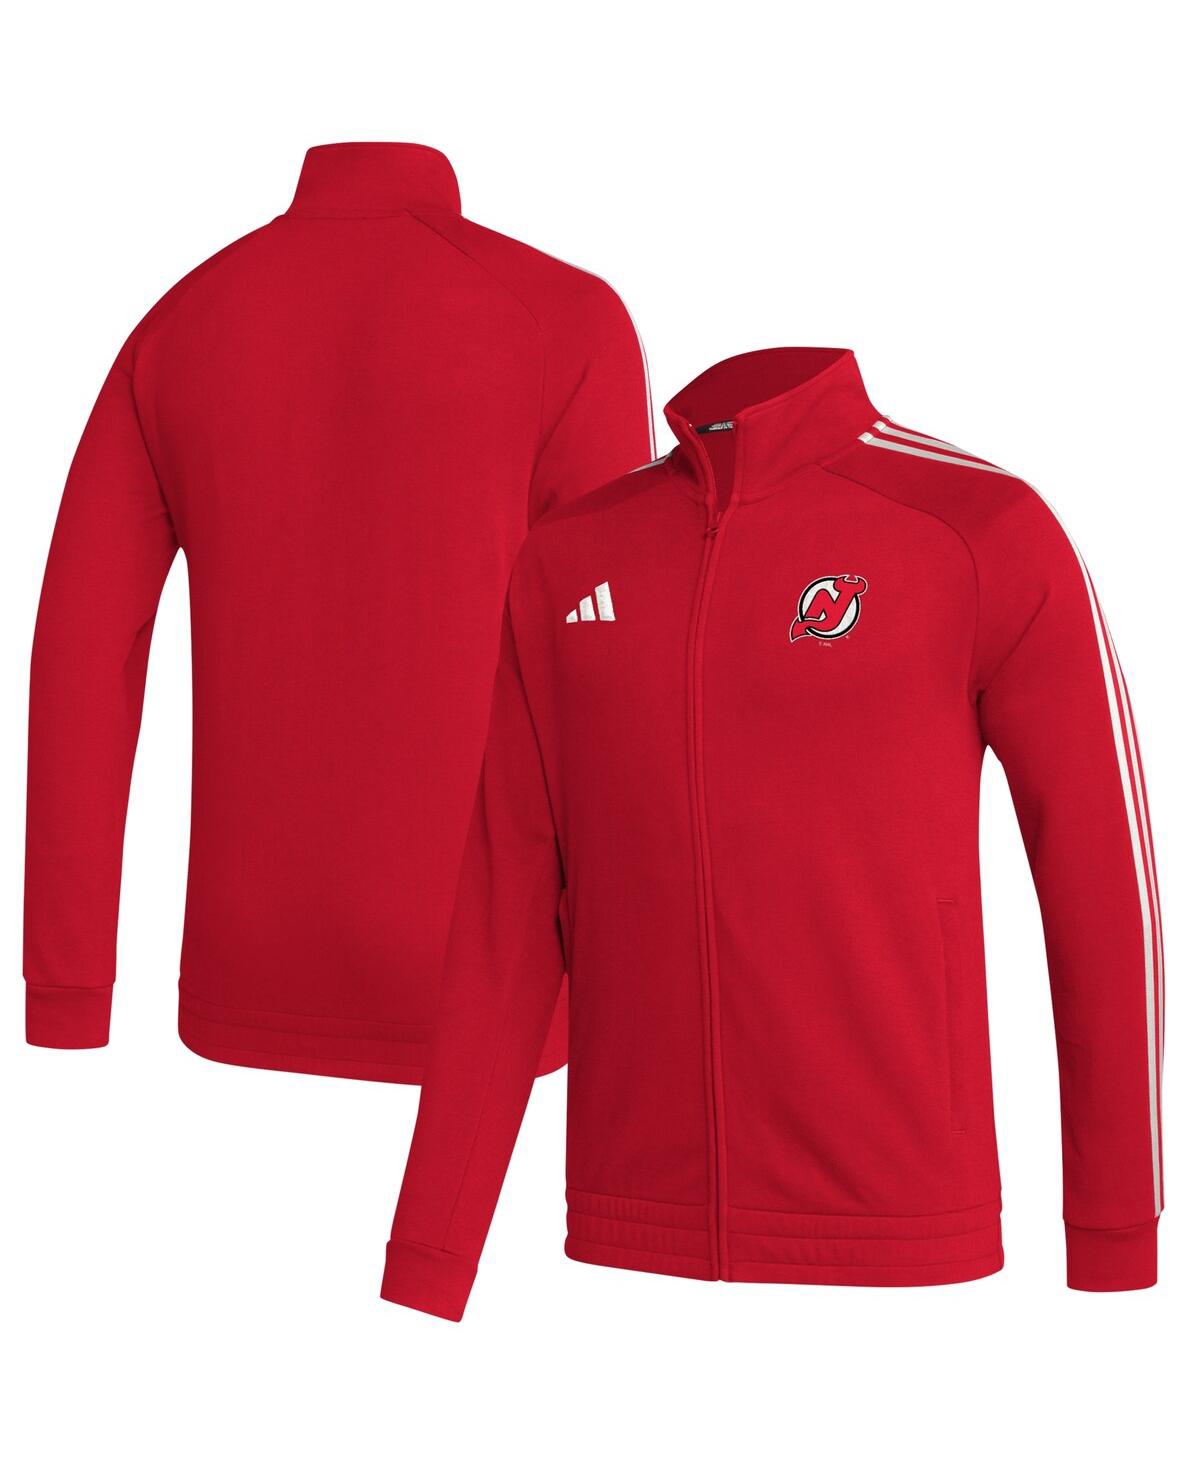 Shop Adidas Originals Men's Adidas Red New Jersey Devils Raglan Full-zip Track Jacket